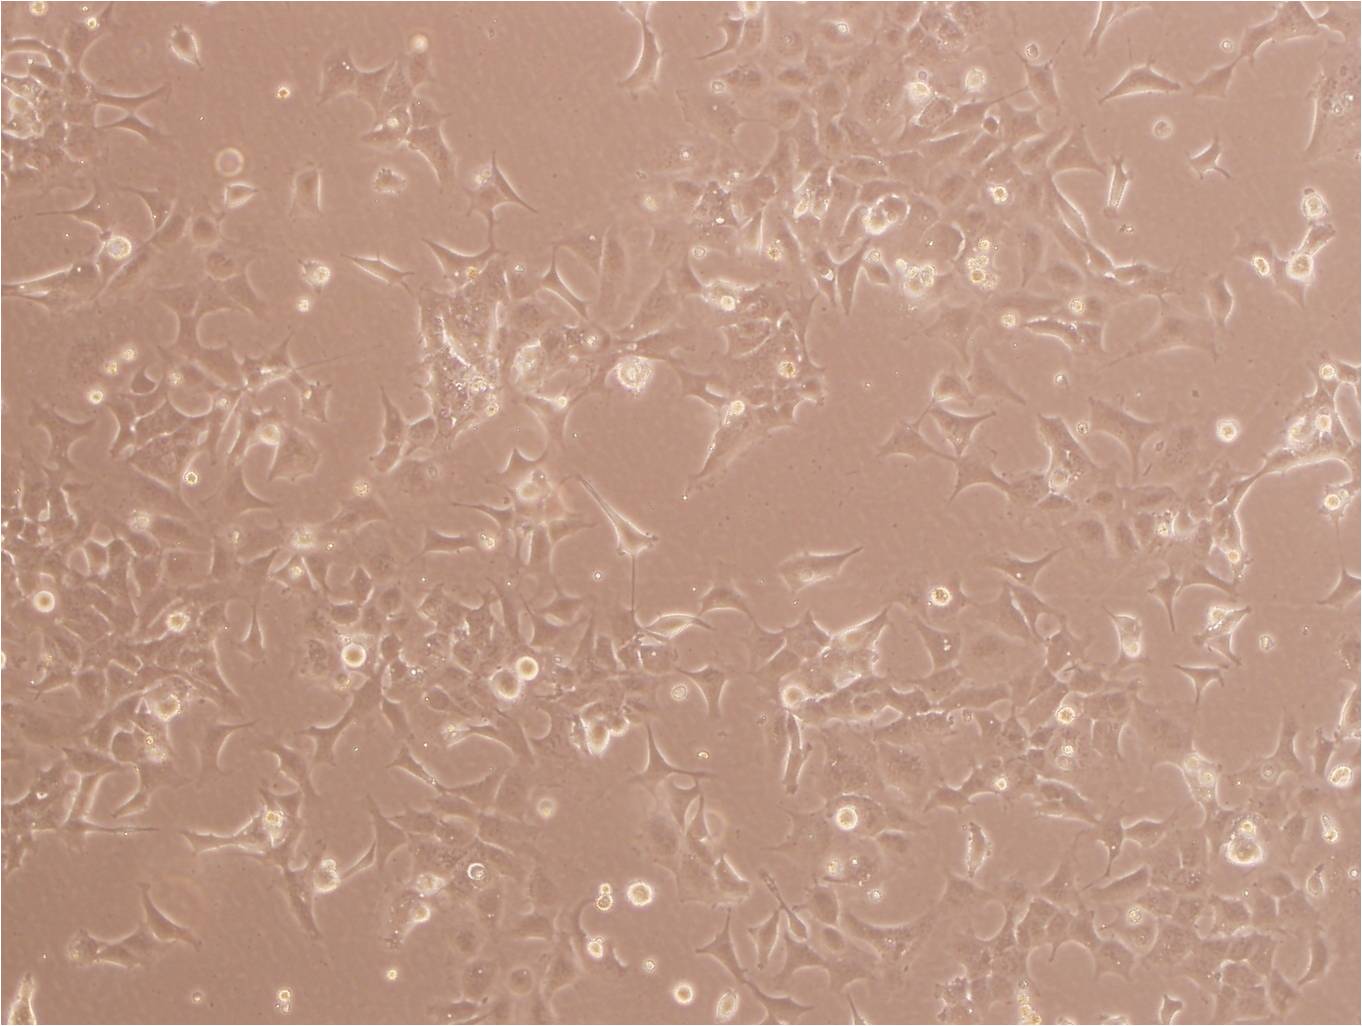 TE-11 Fresh Cells|人食管癌细胞(送STR基因图谱),TE-11 Fresh Cells